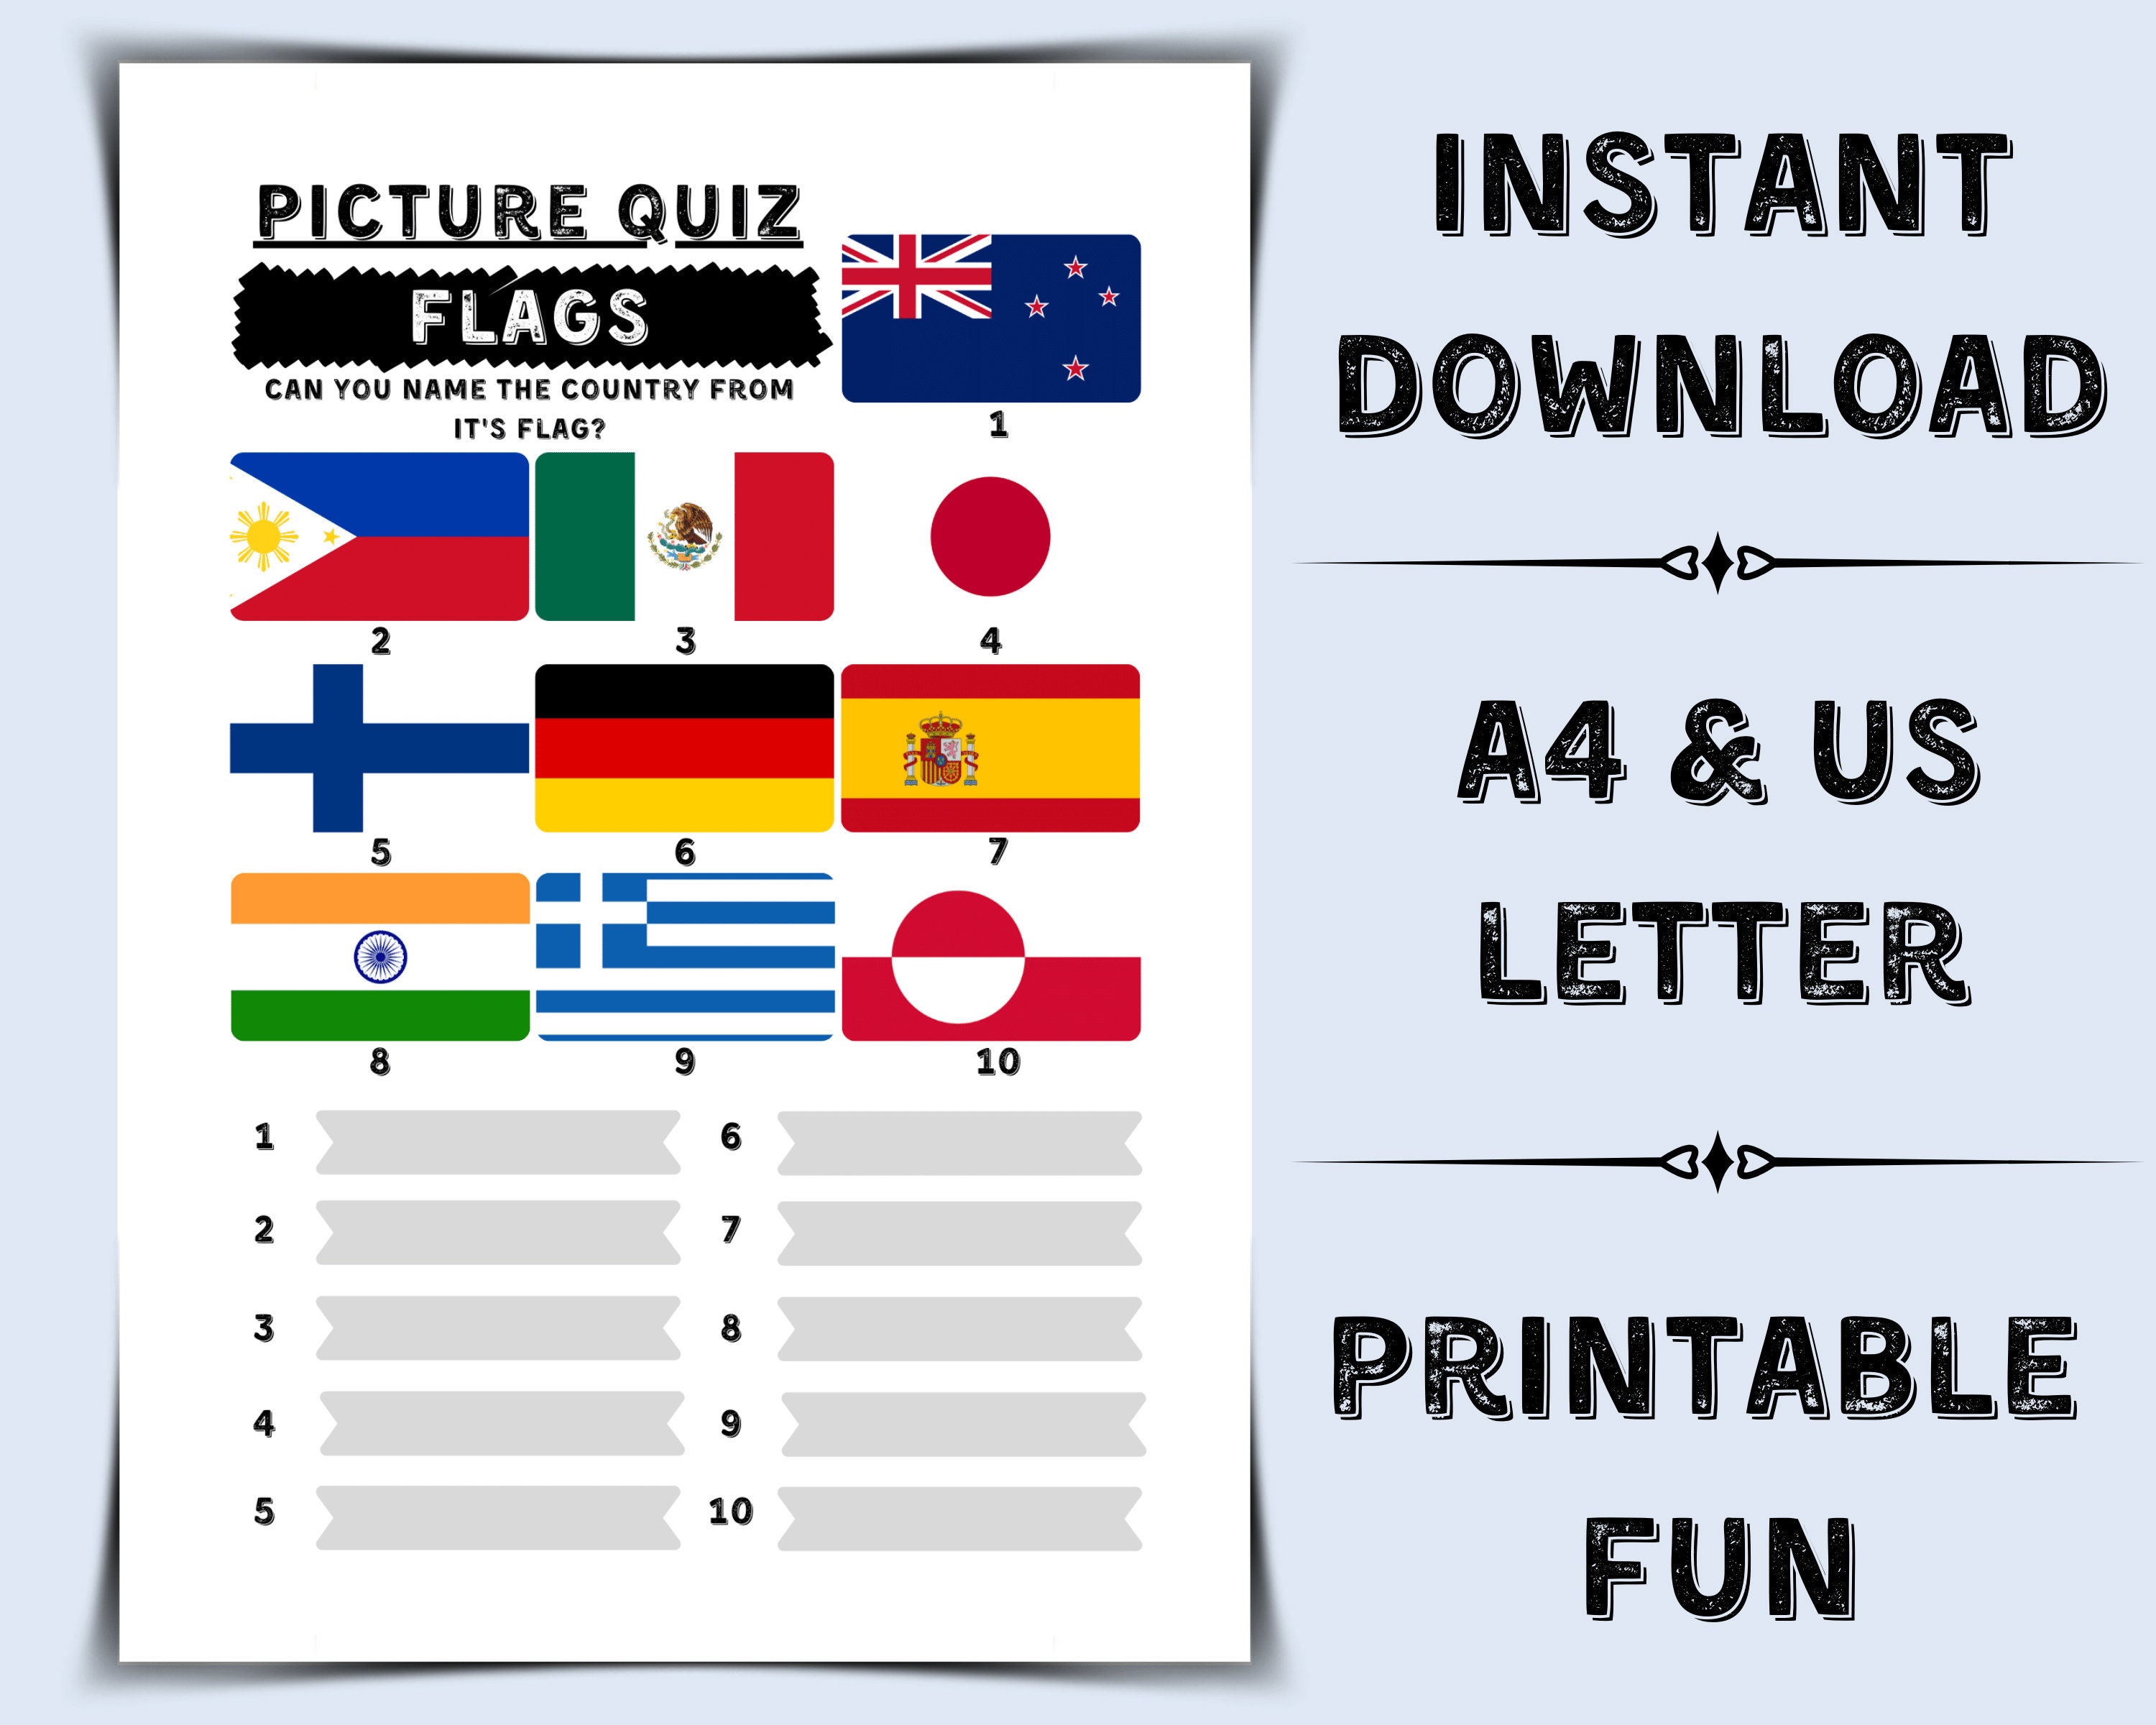 15 Flags, 15 Capitals II Quiz - By EddievB